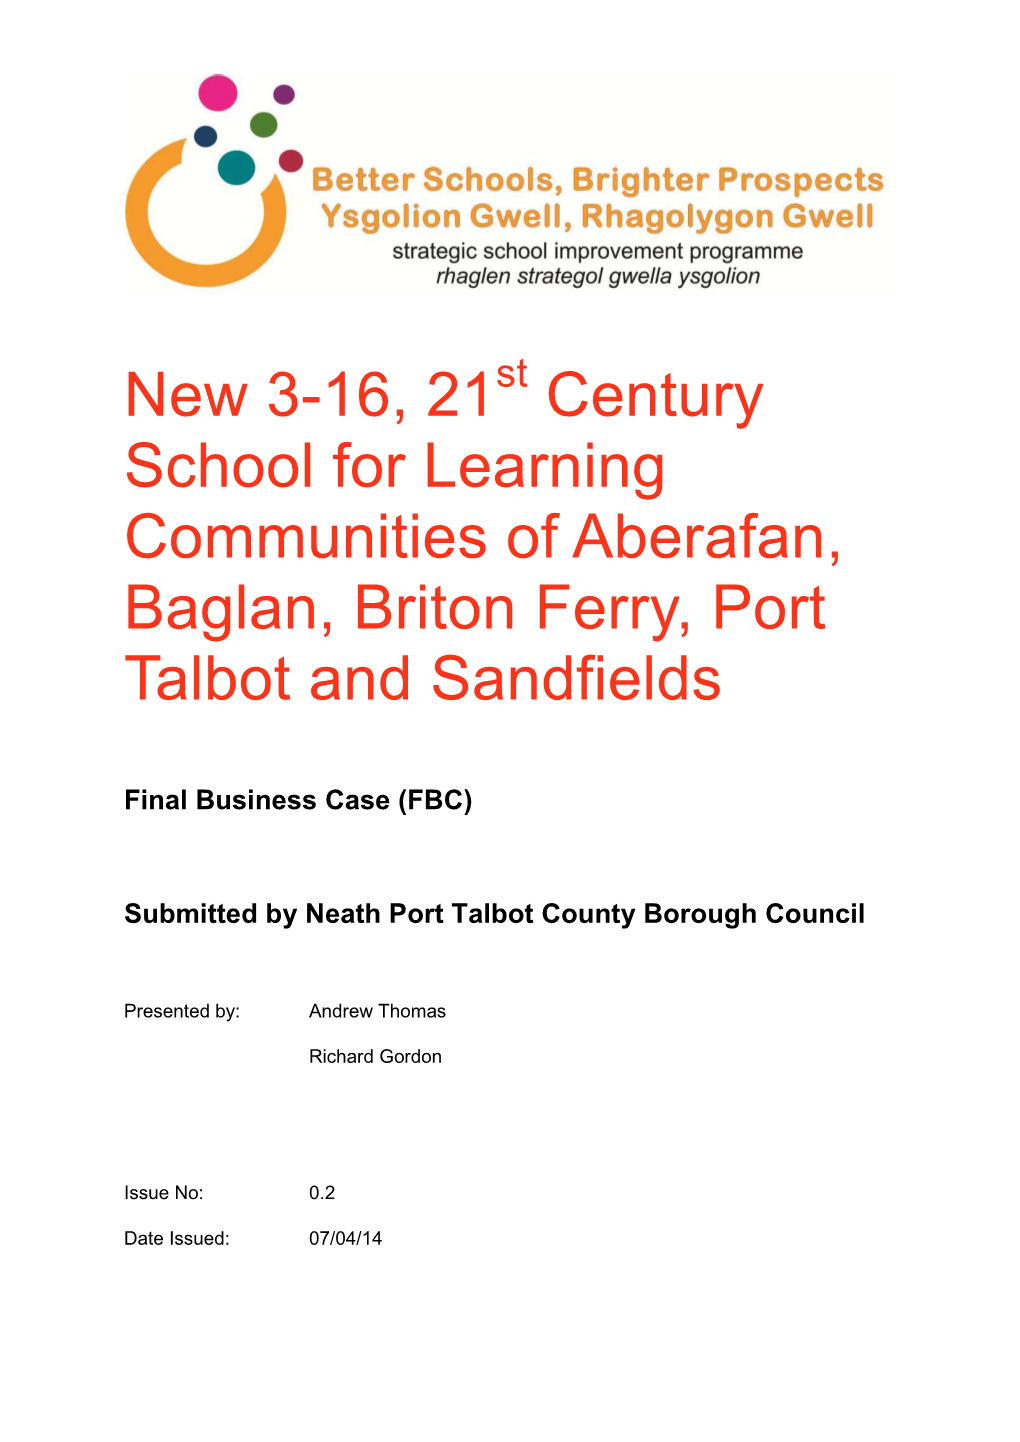 Century School for Learning Communities of Aberafan, Baglan, Briton Ferry, Port Talbot and Sandfields